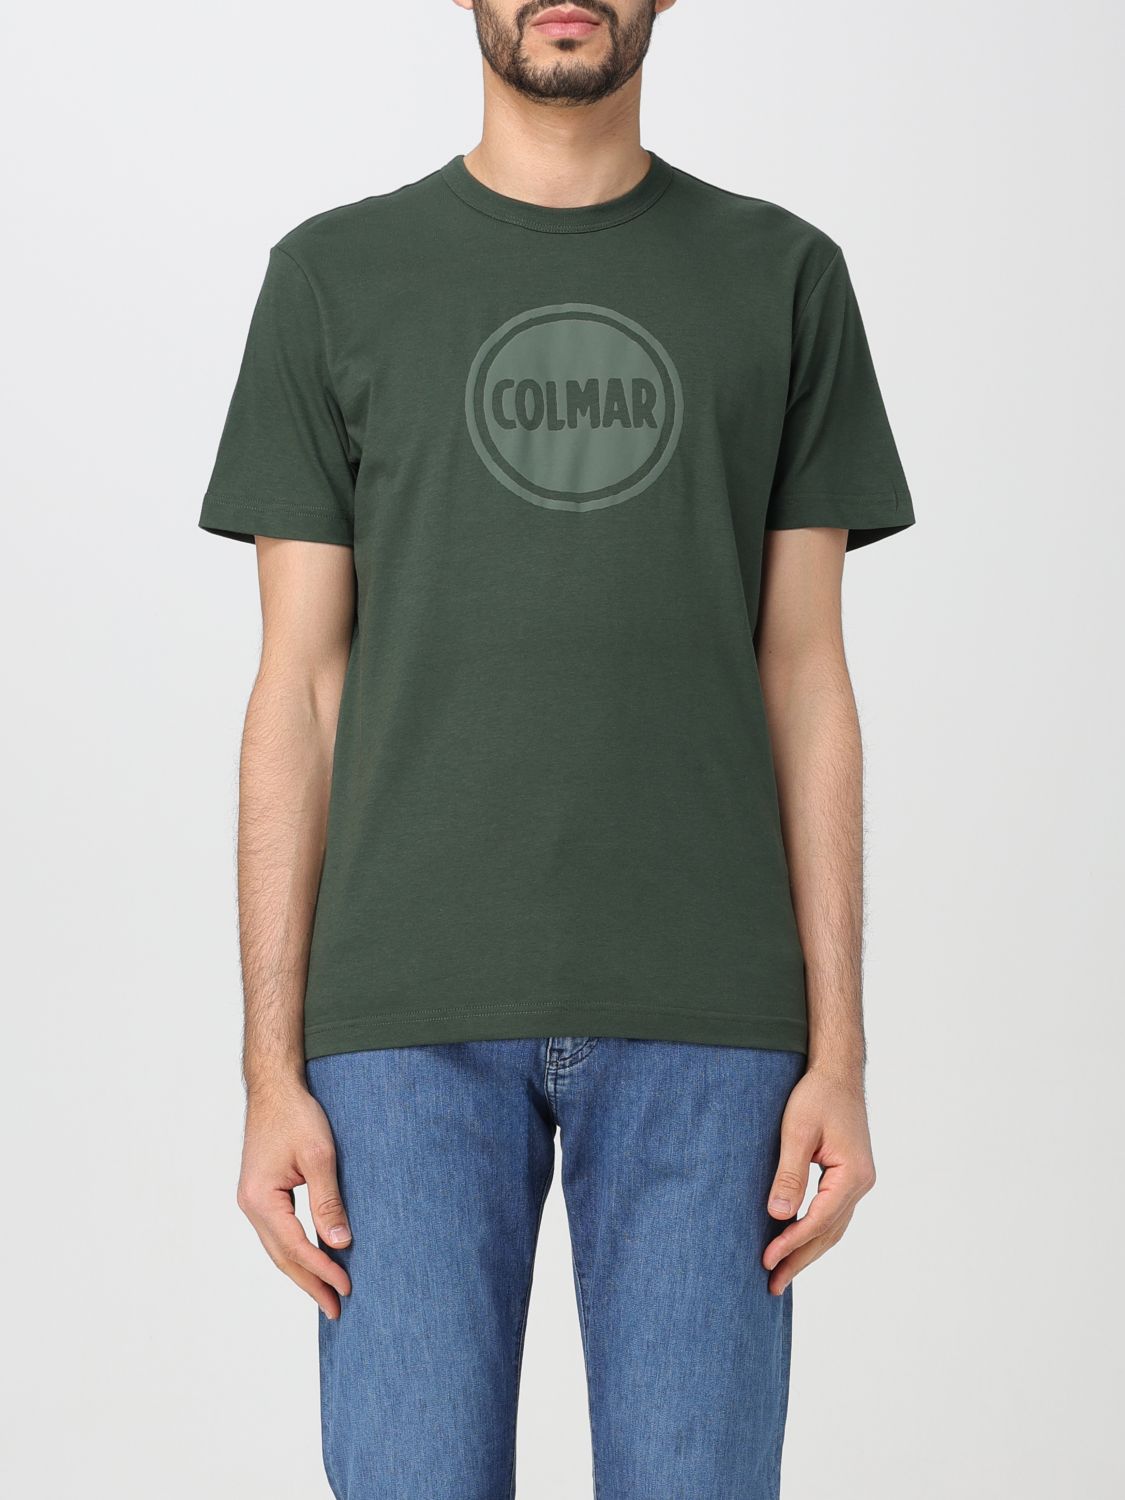 Colmar T-shirt  Men Colour Military